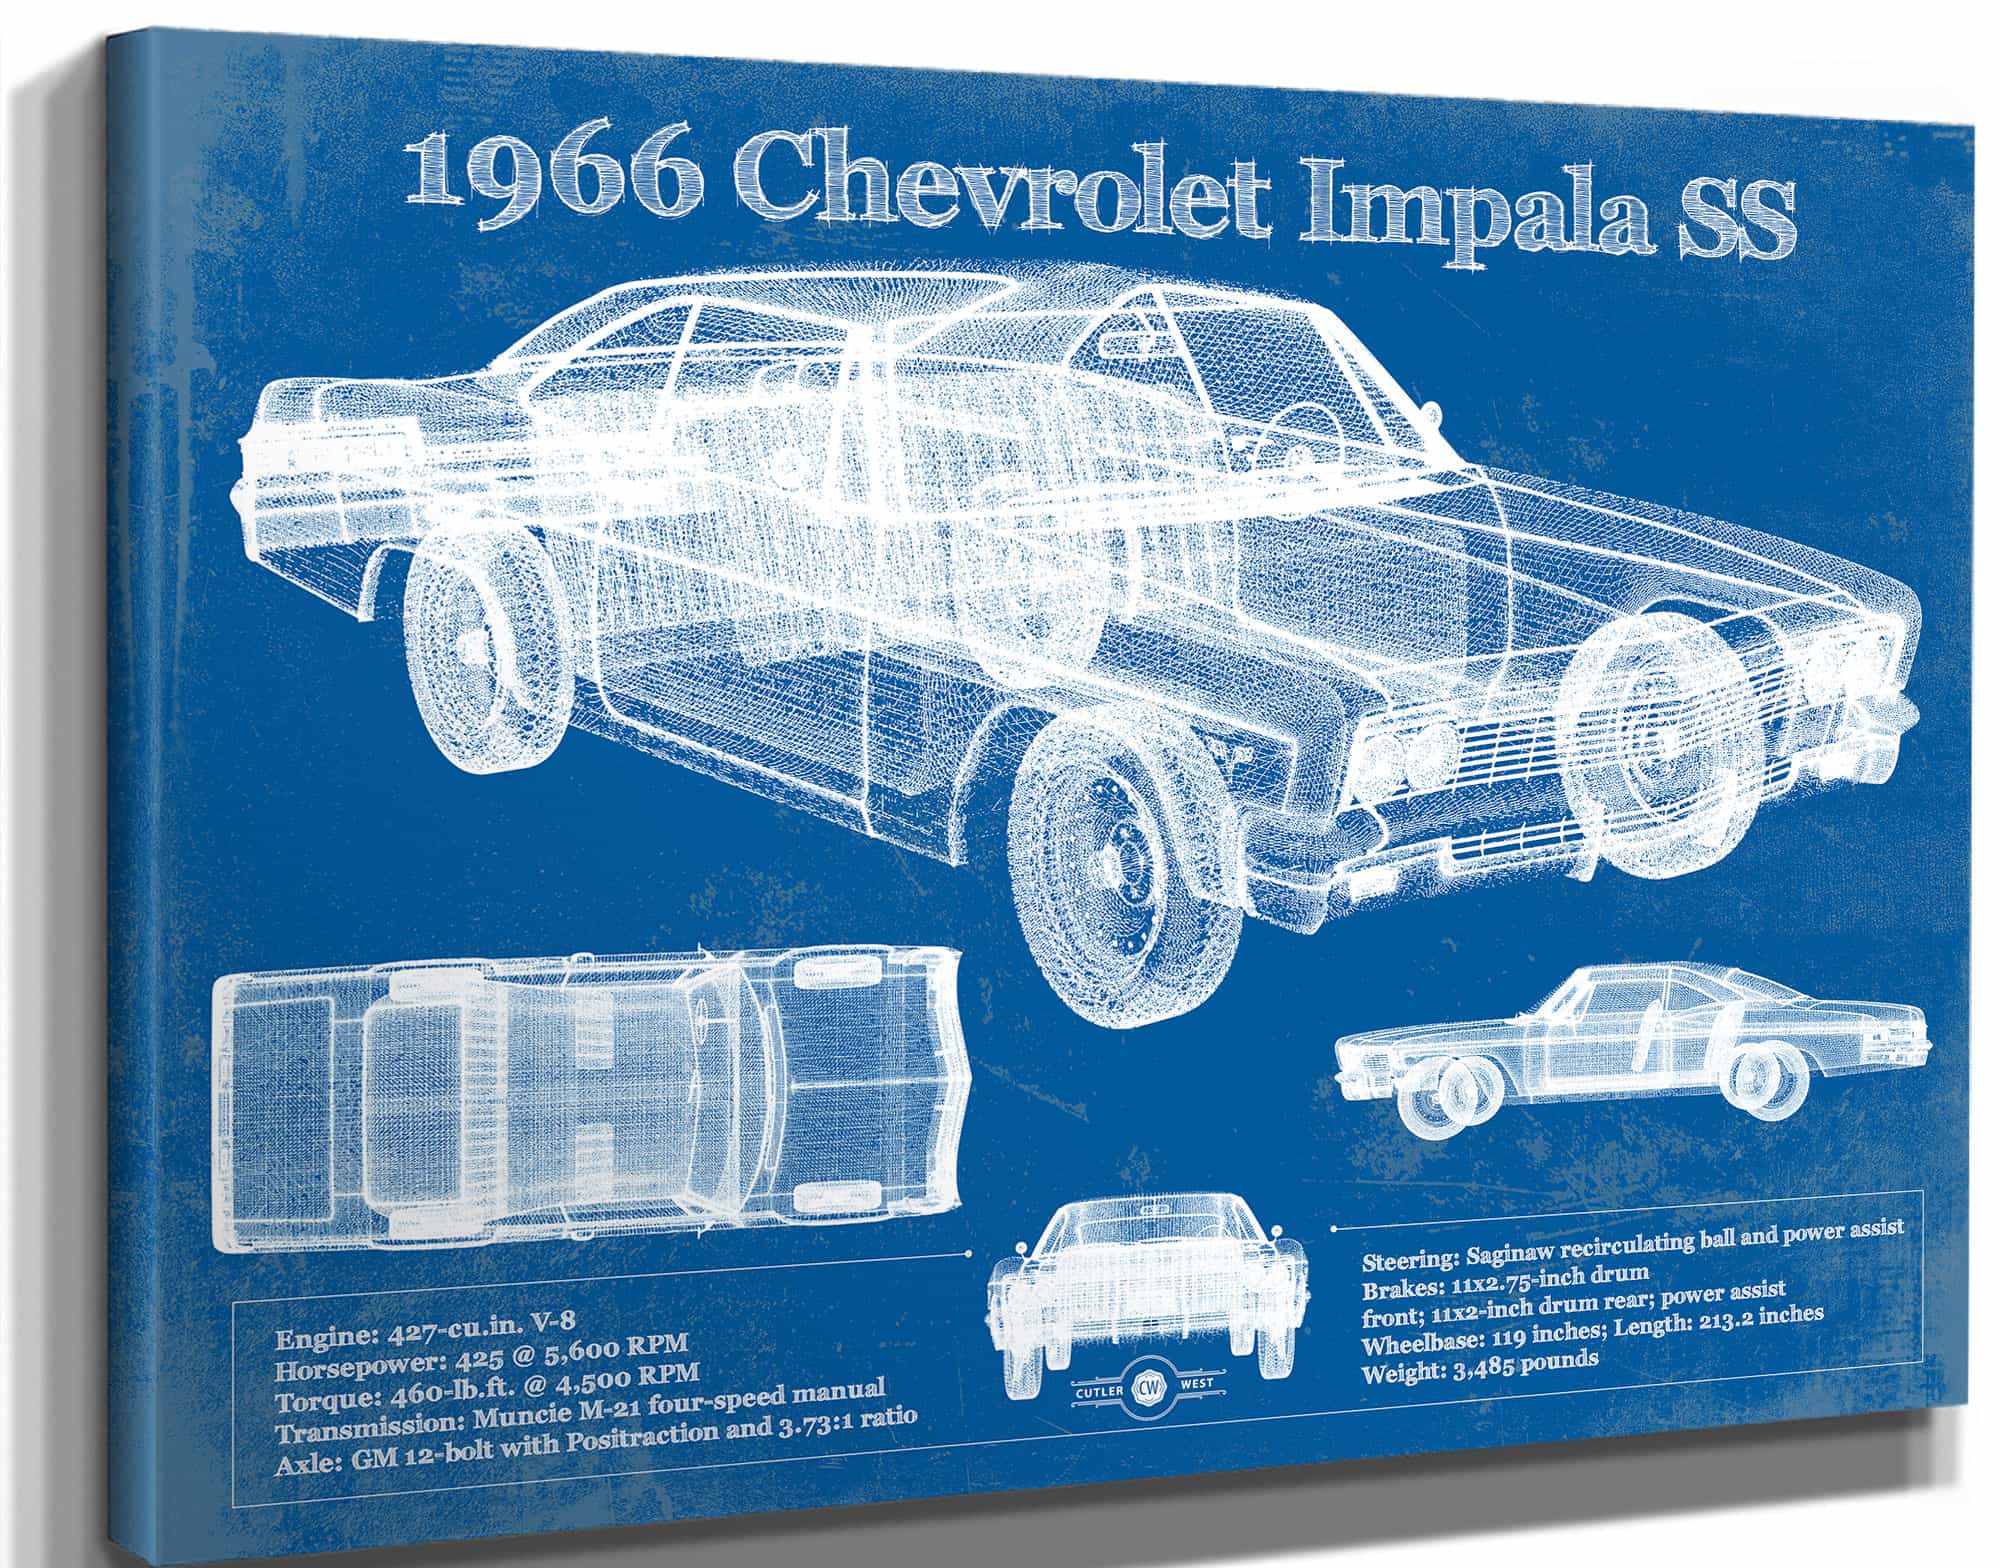 1966 Chevrolet Impala SS Blueprint Vintage Auto Print